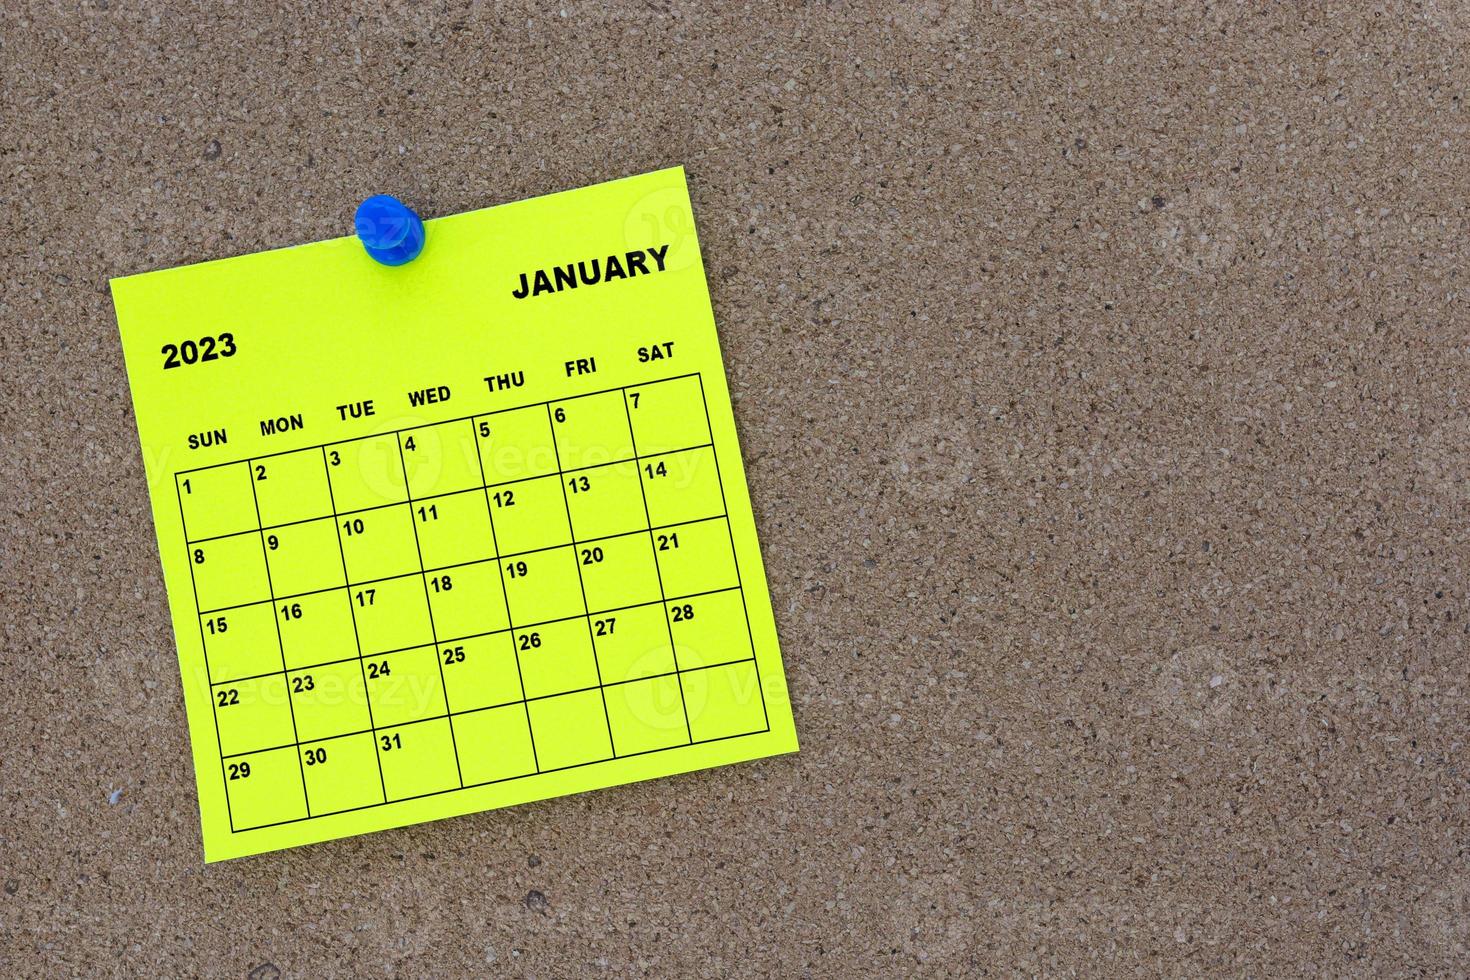 januar 2023 haftnotizkalender mit pin auf kork-bulletin-plakatwand. foto